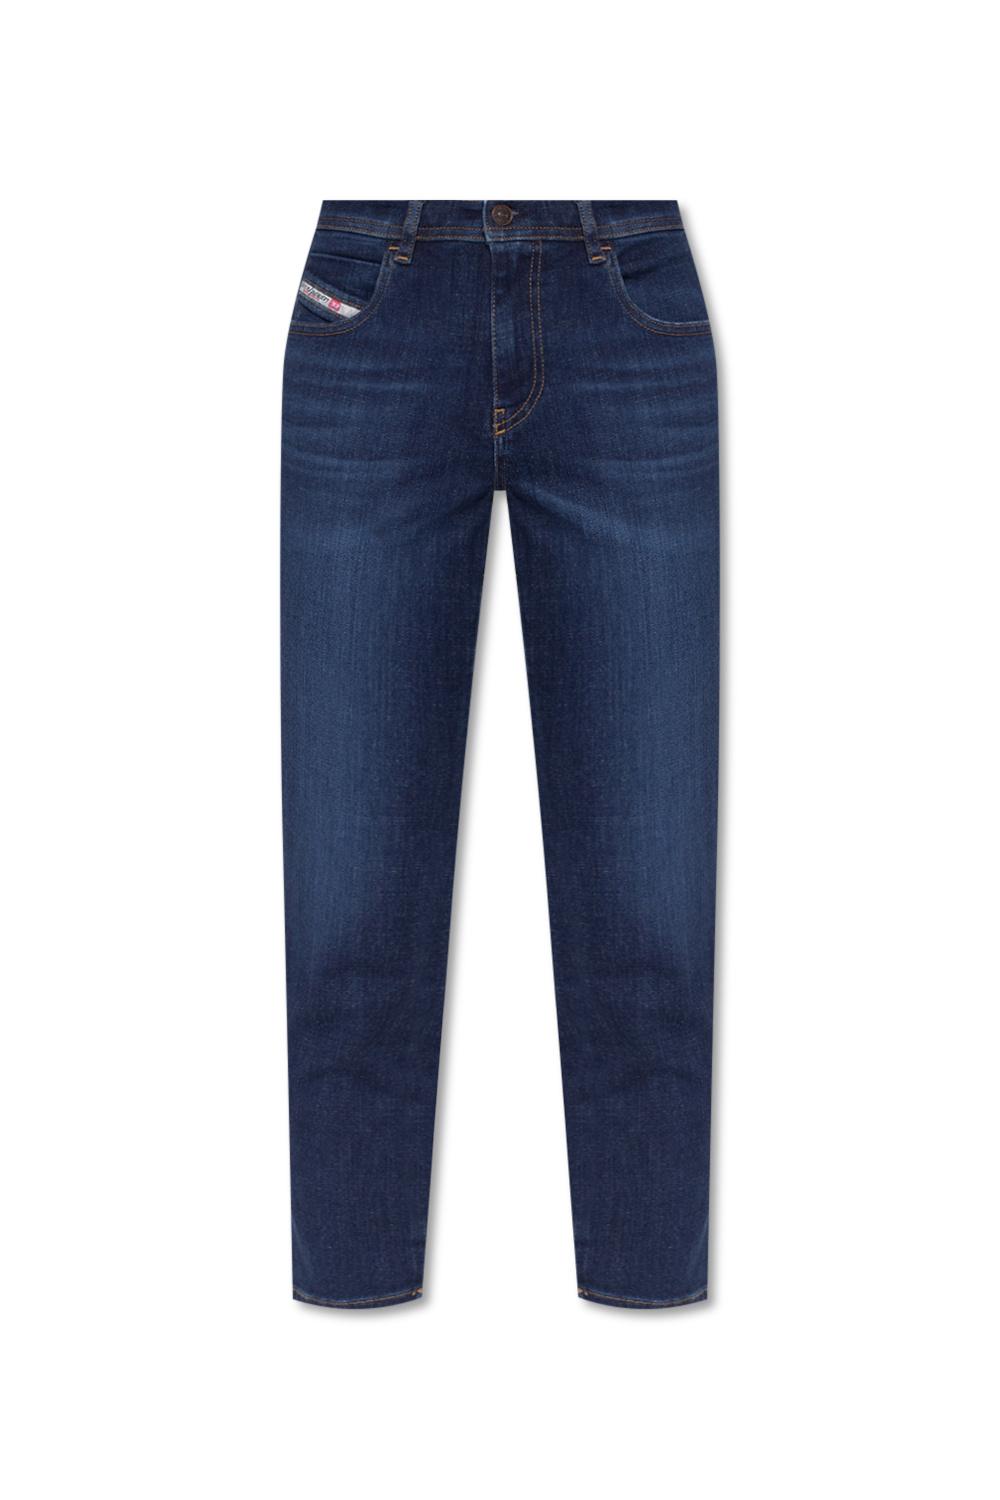 '2015 Babhila' Jeans